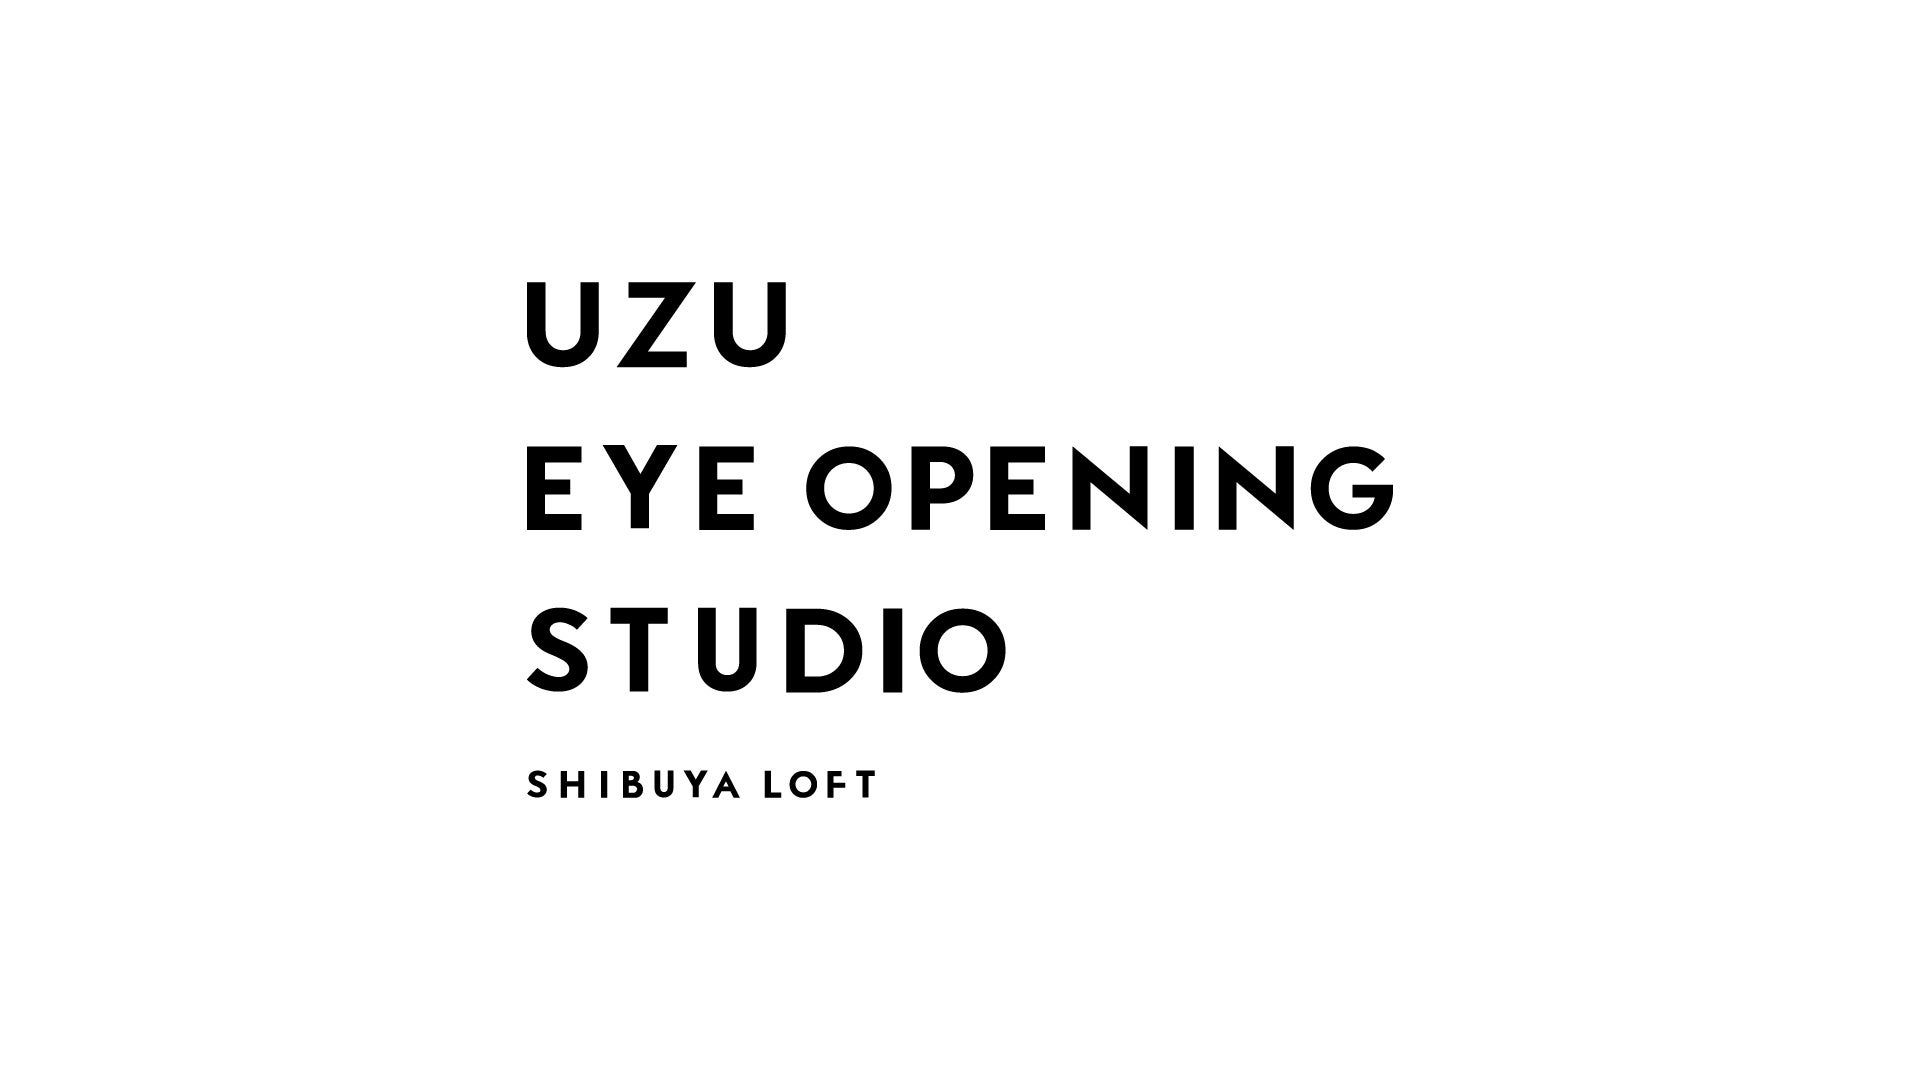 【UZU BY FLOWFUSHI】さあ、目の覚めるような色彩体験を。『UZU EYE OPENING STUDIO』渋谷ロフトにて5月17日〜29日の期間限定ポップアップイベントを開催。